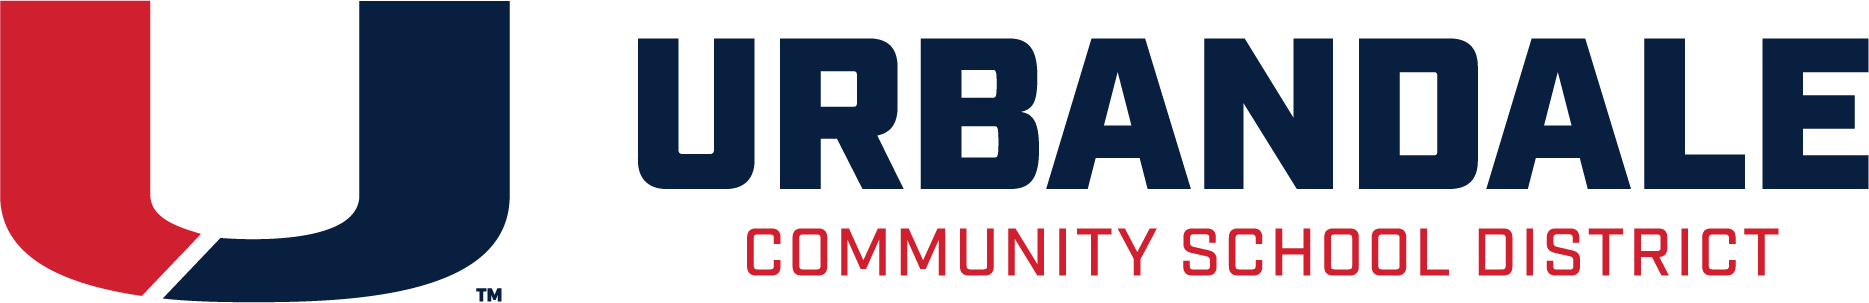 Urbandale Community School District logo